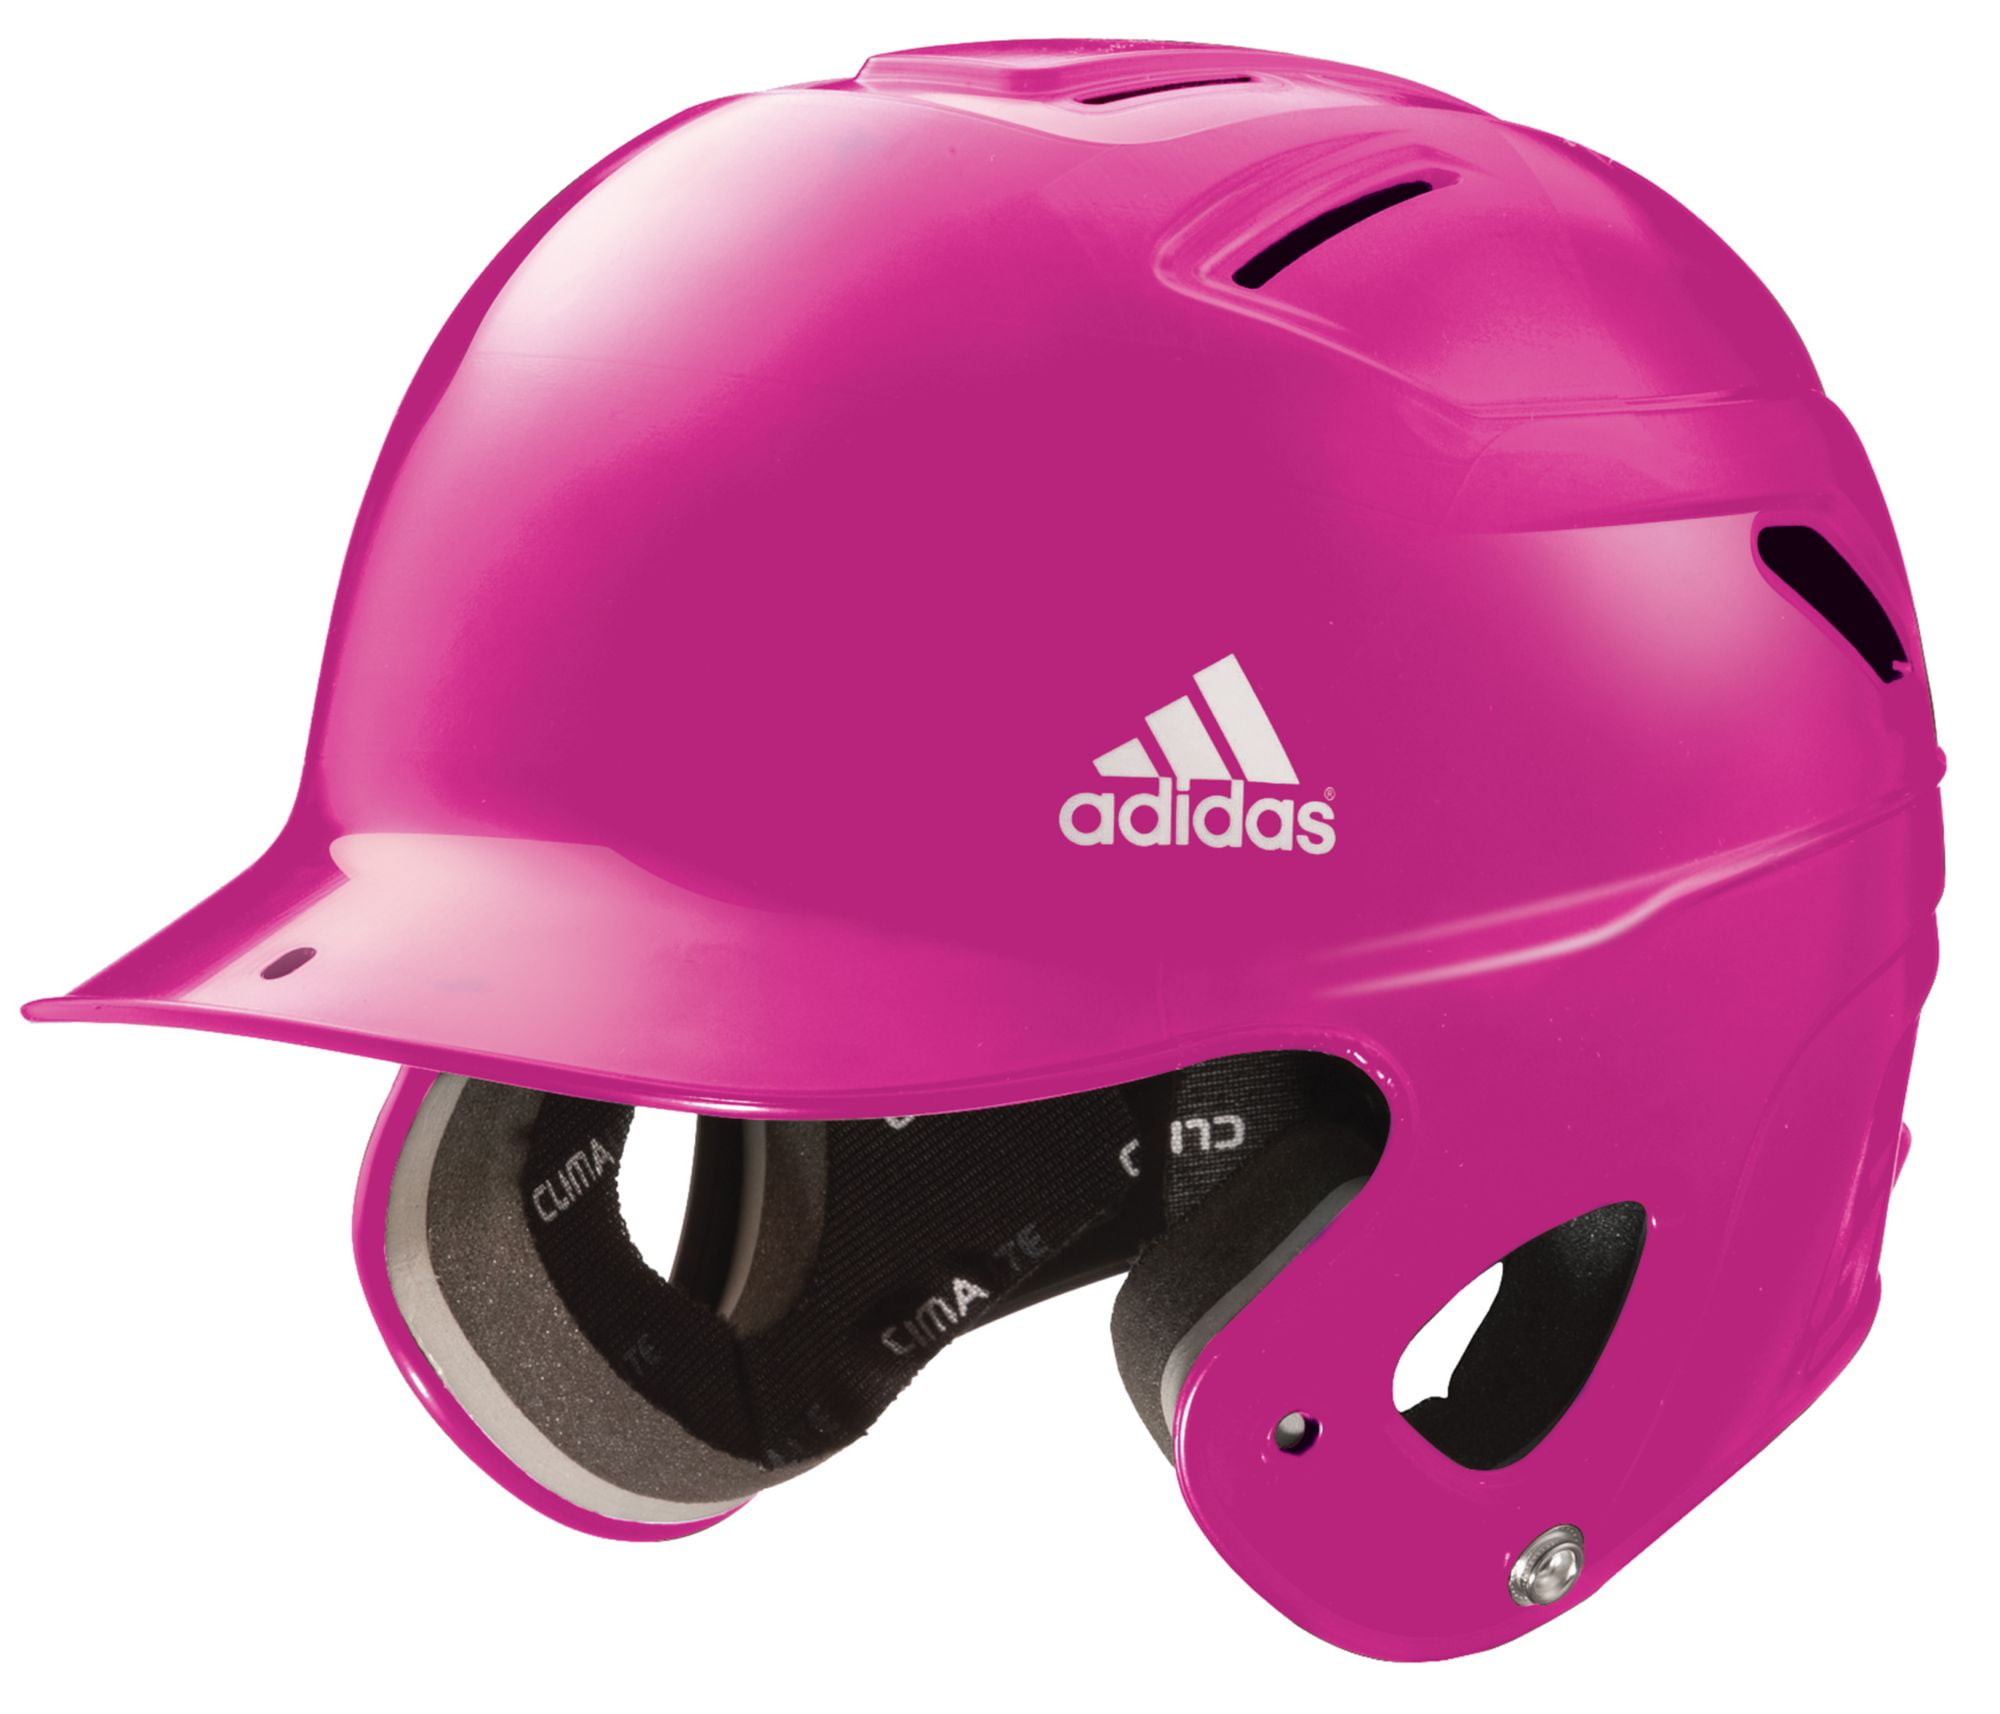 adidas phenom batting helmet